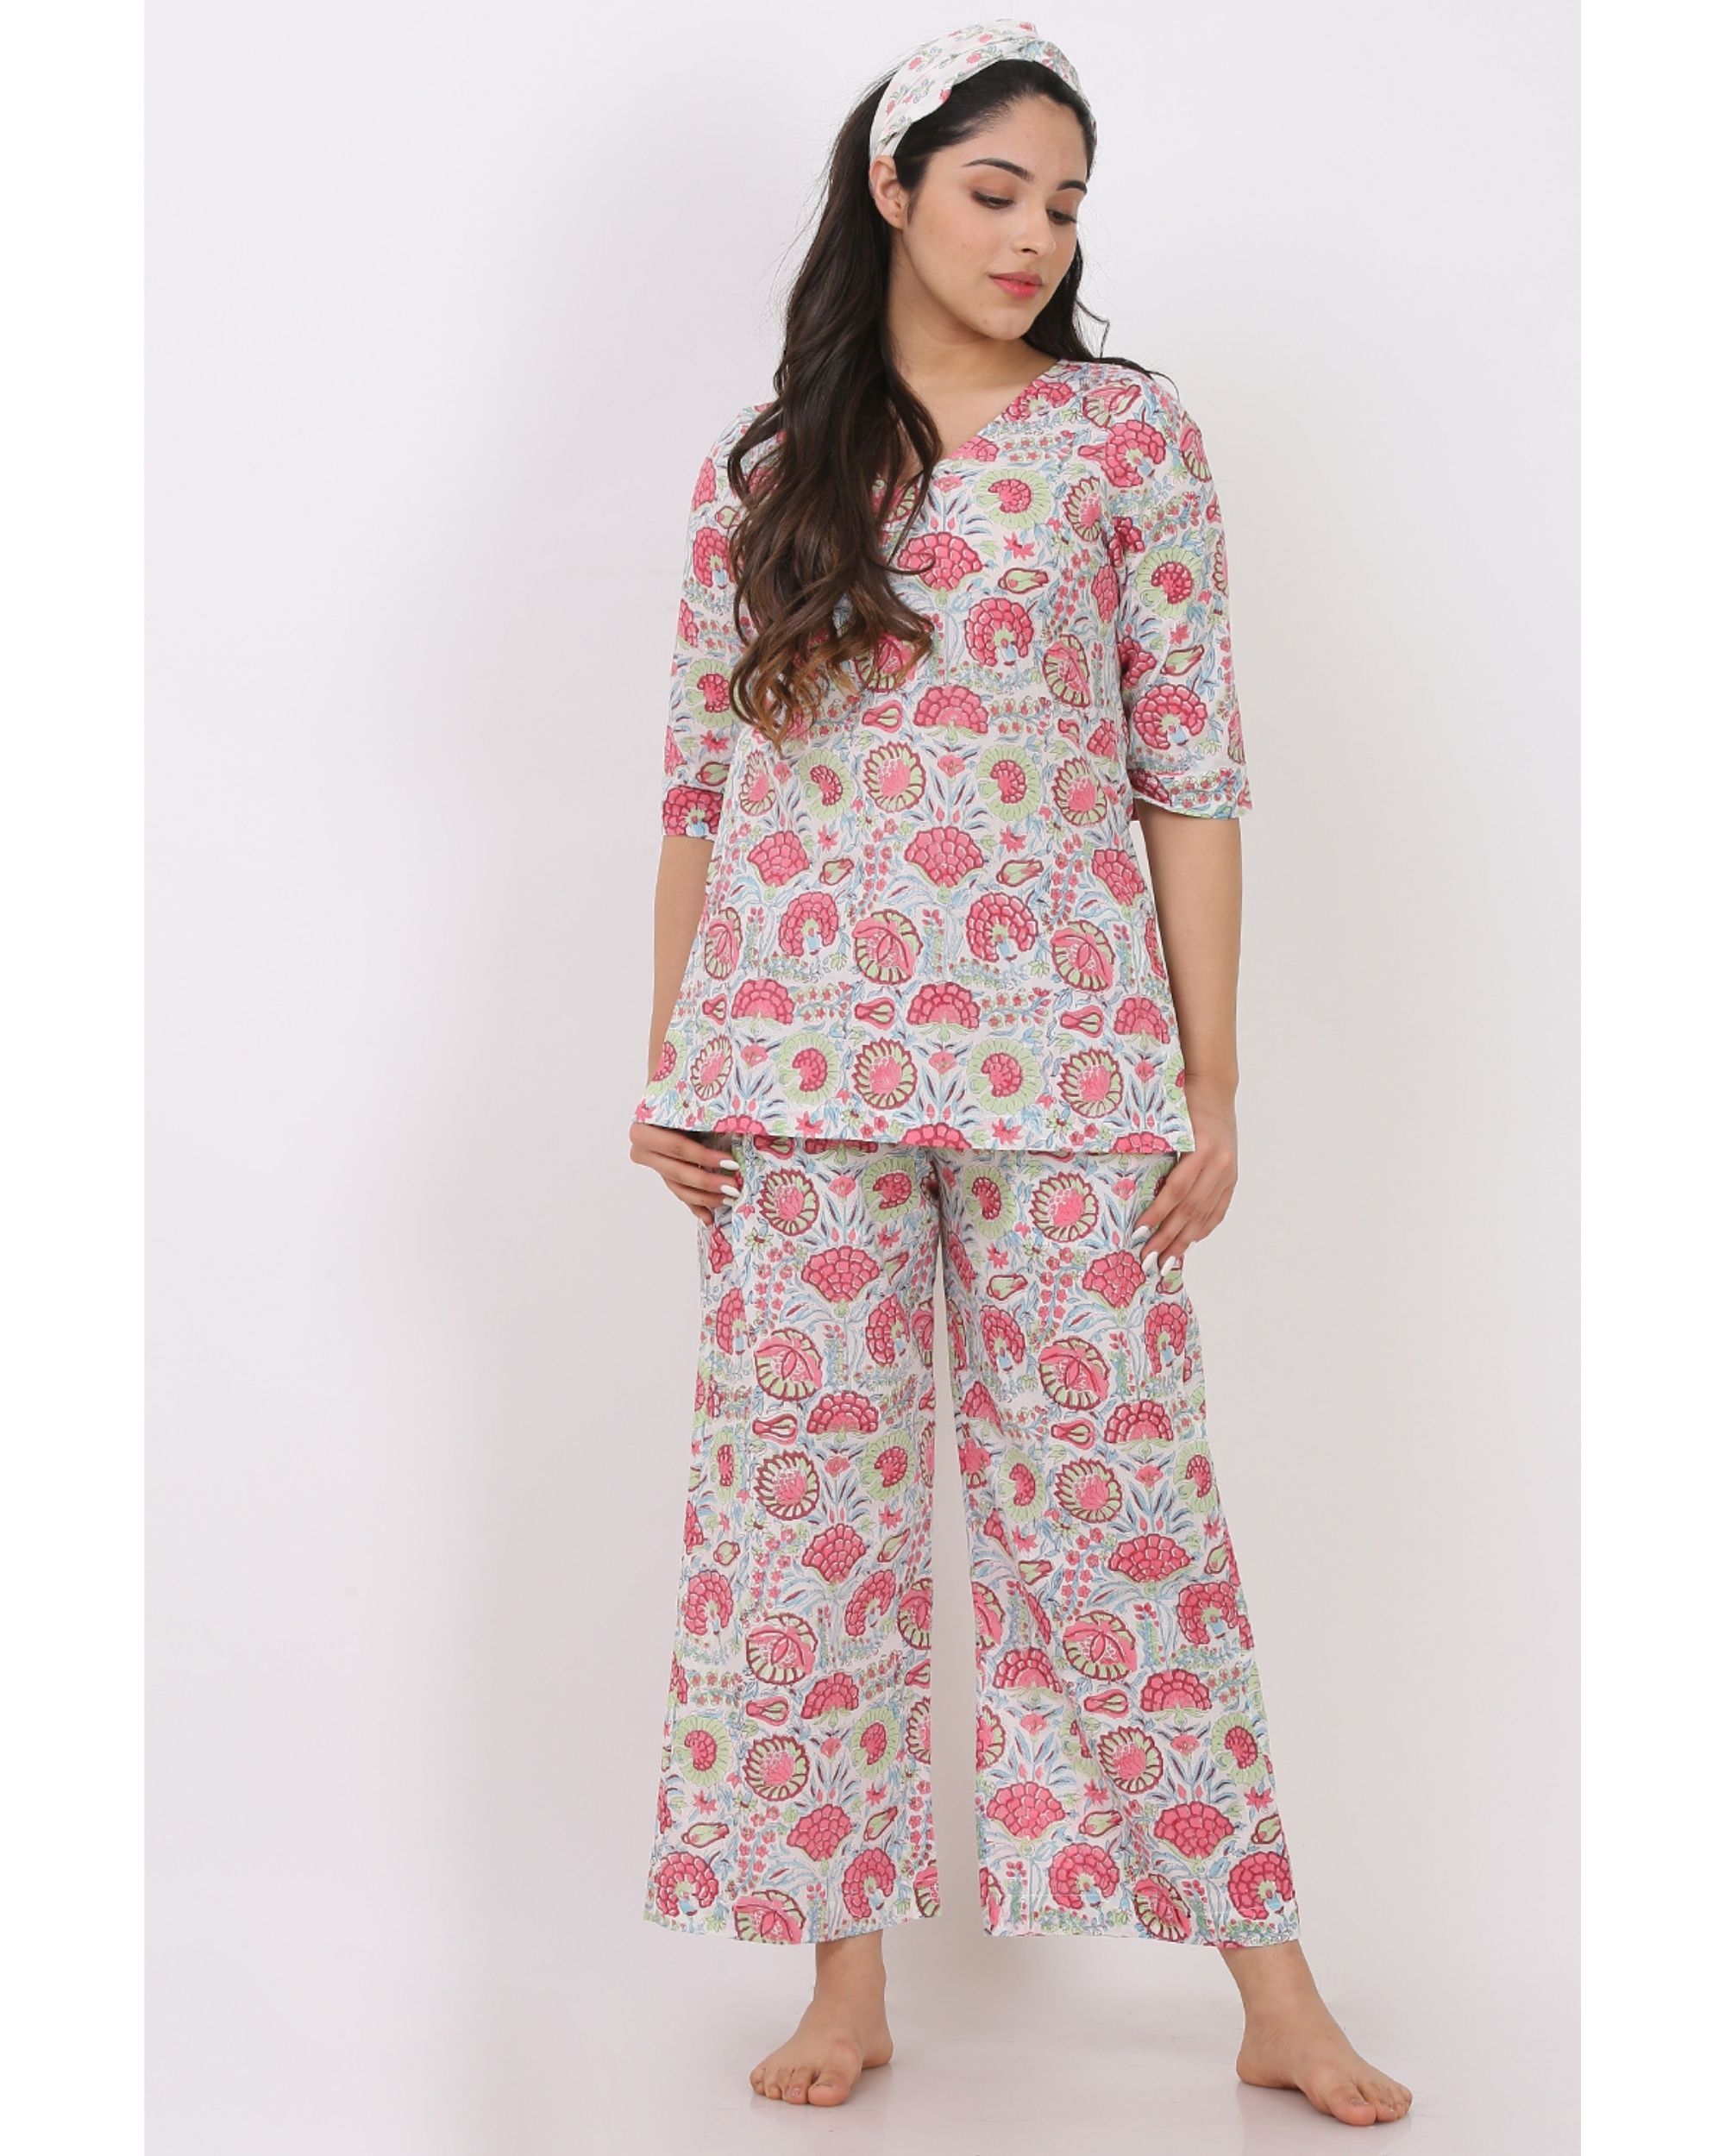 Off white and pink short printed kurta and pyjama with hair band - set of three